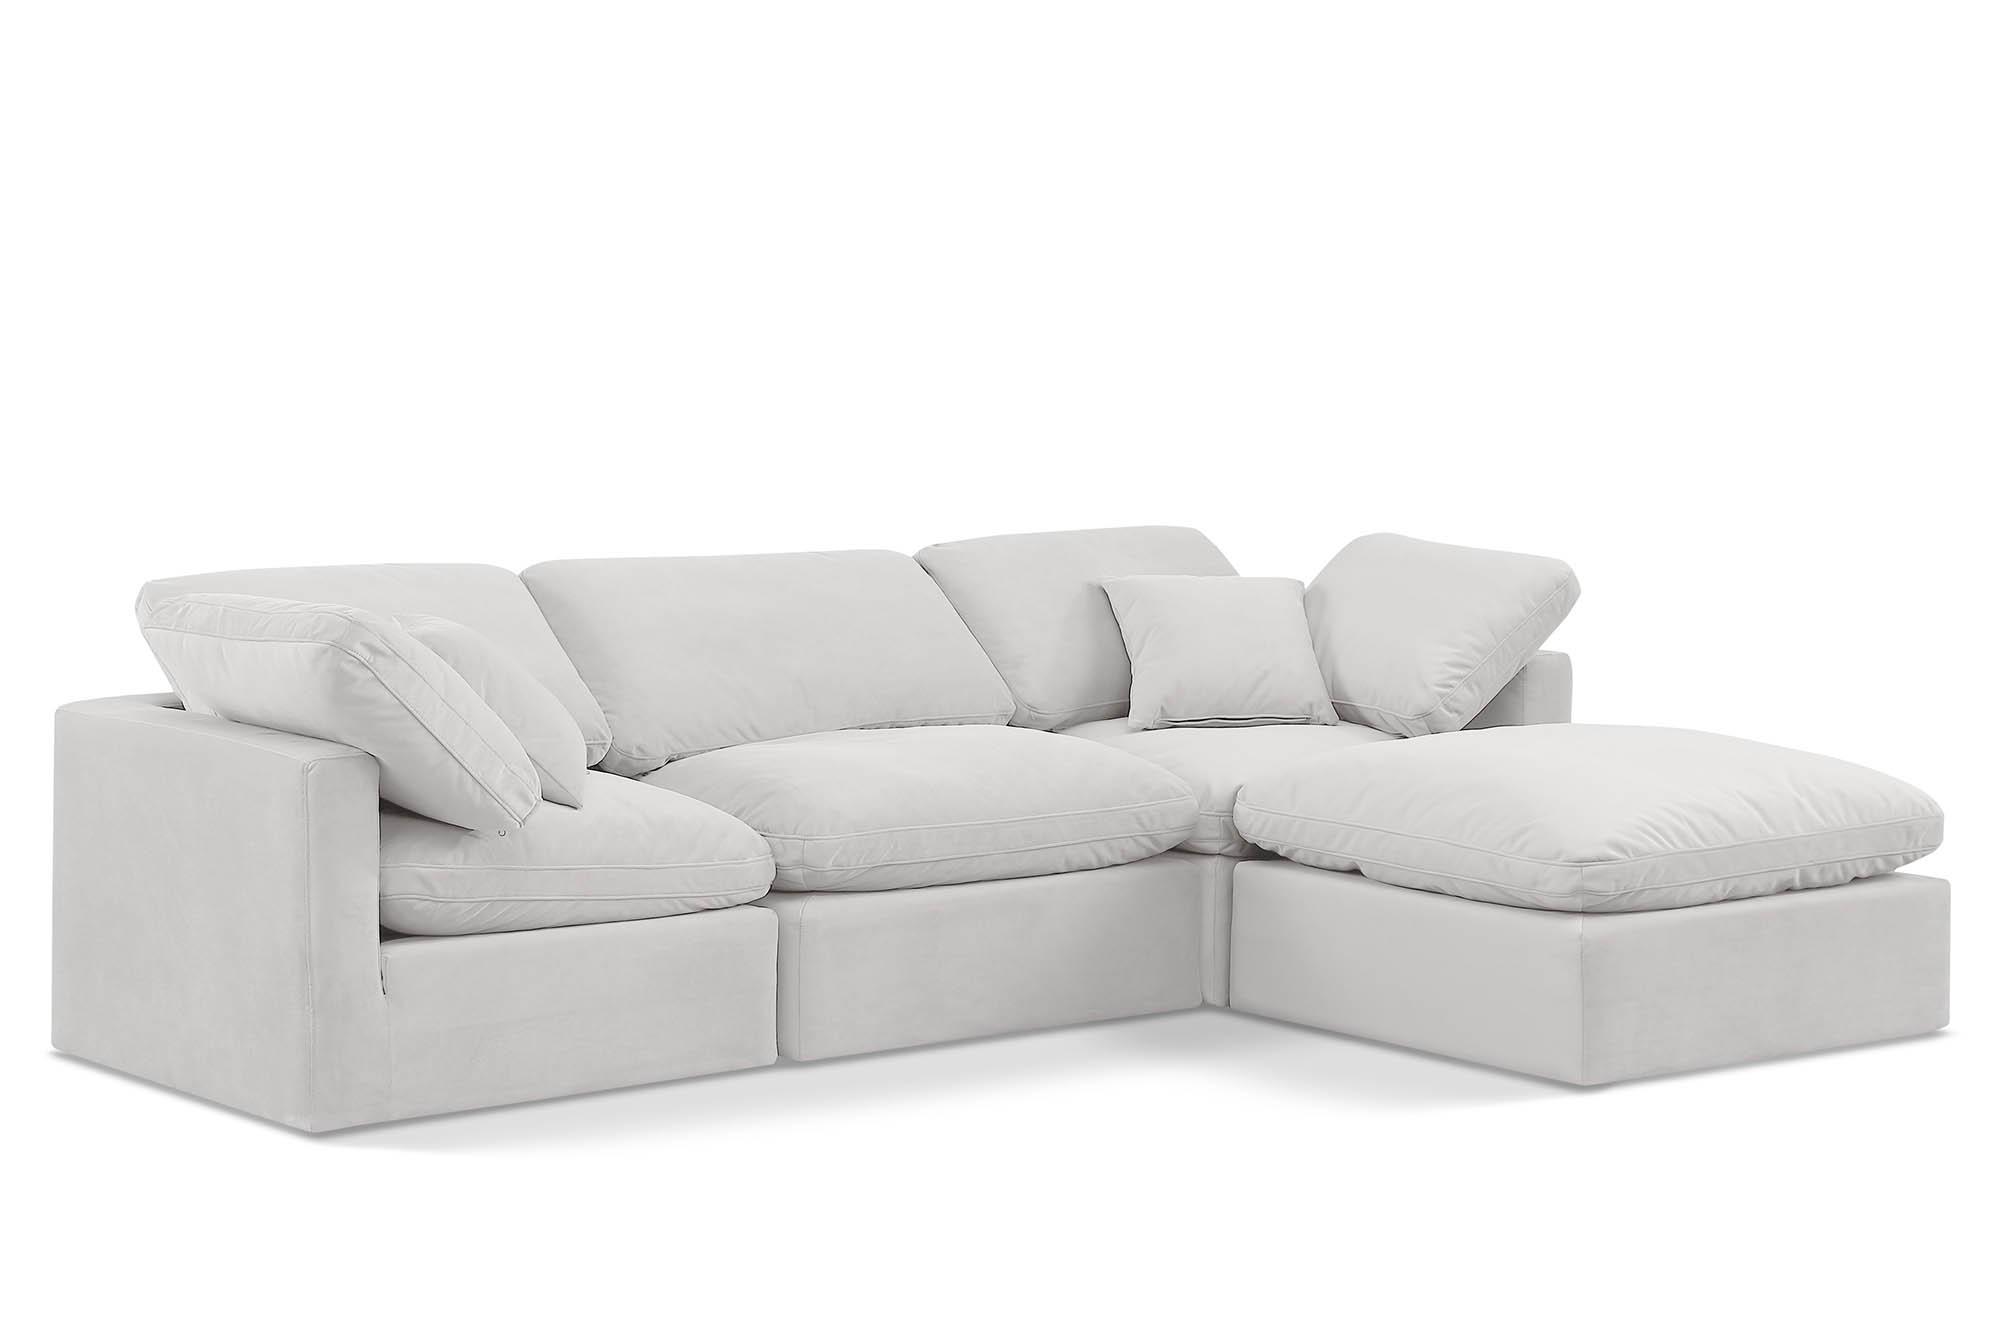 Contemporary, Modern Modular Sectional Sofa INDULGE 147Cream-Sec4A 147Cream-Sec4A in Cream Velvet